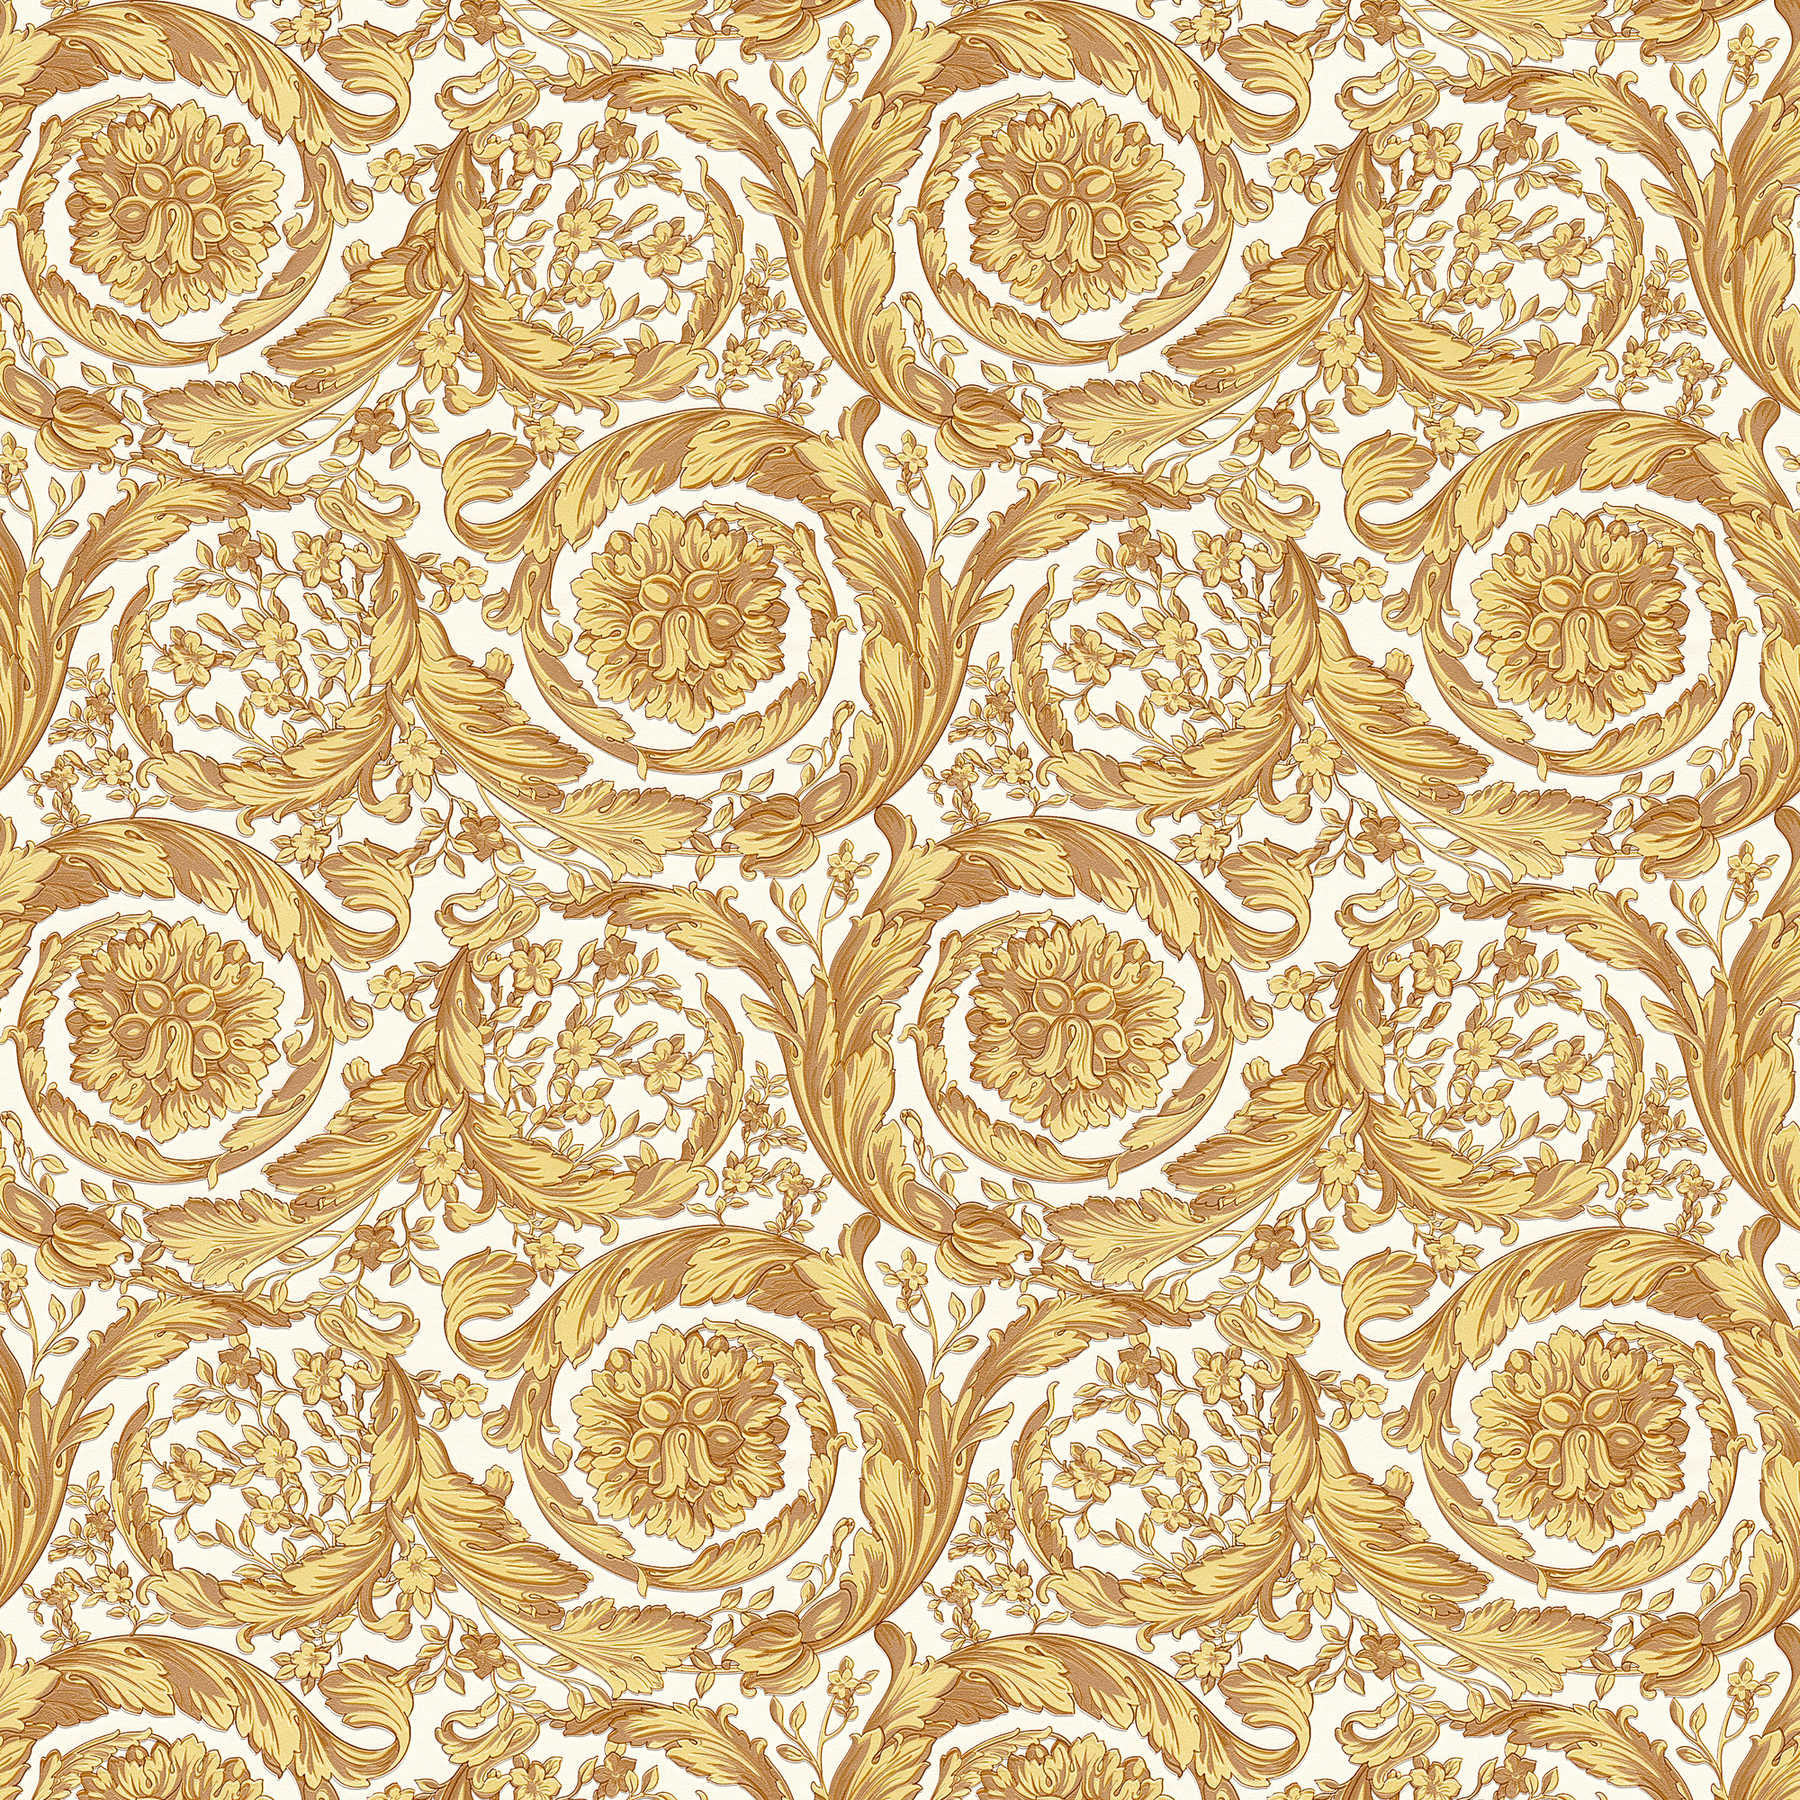 VERSACE Papier peint ornemental motif floral - or, jaune, beige
